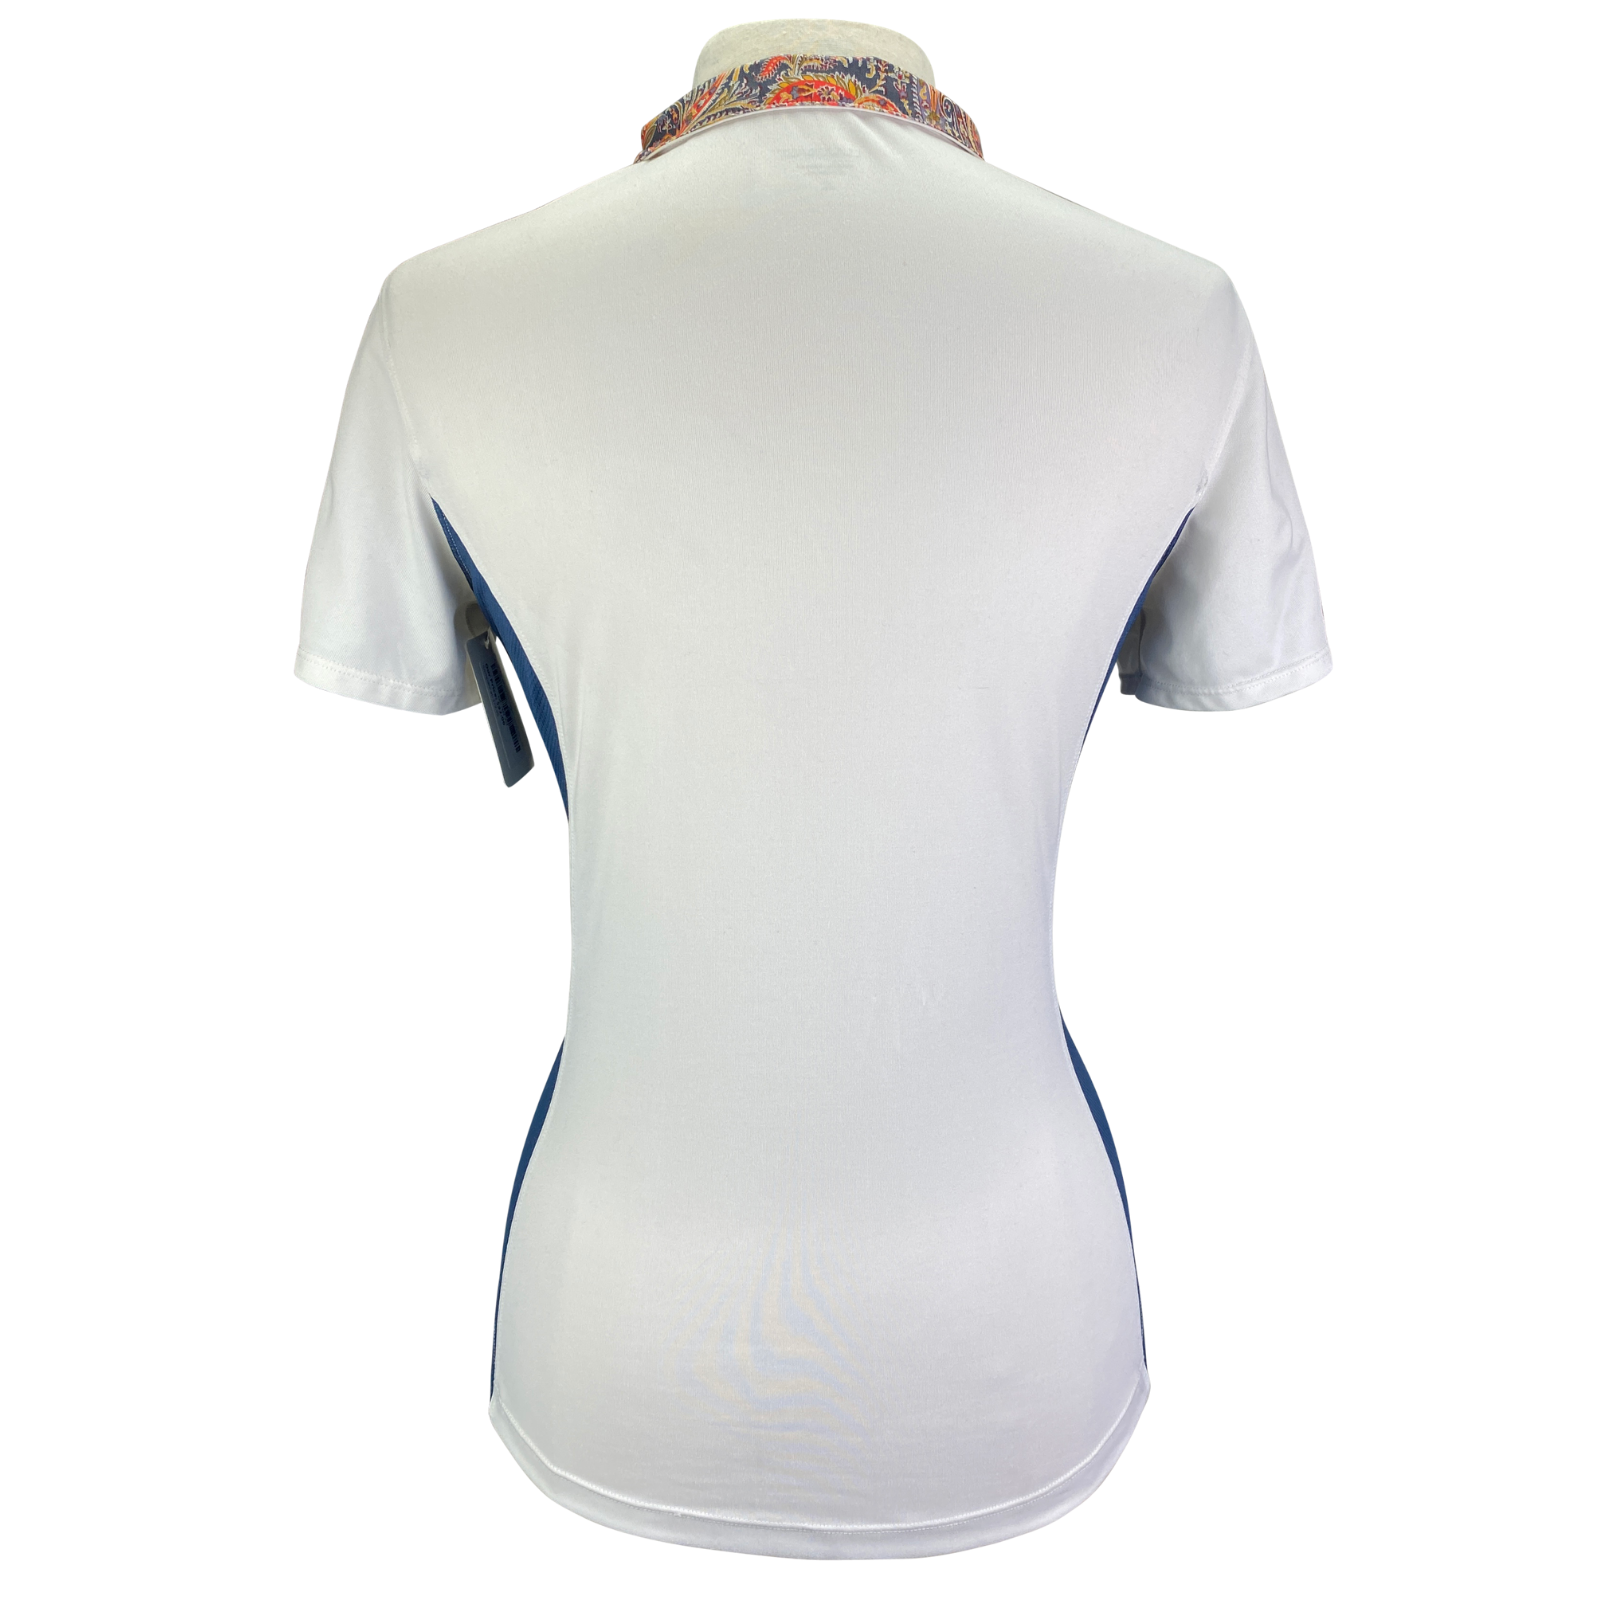 Dover Saddlery CoolBlast Show Shirt in White/Blue